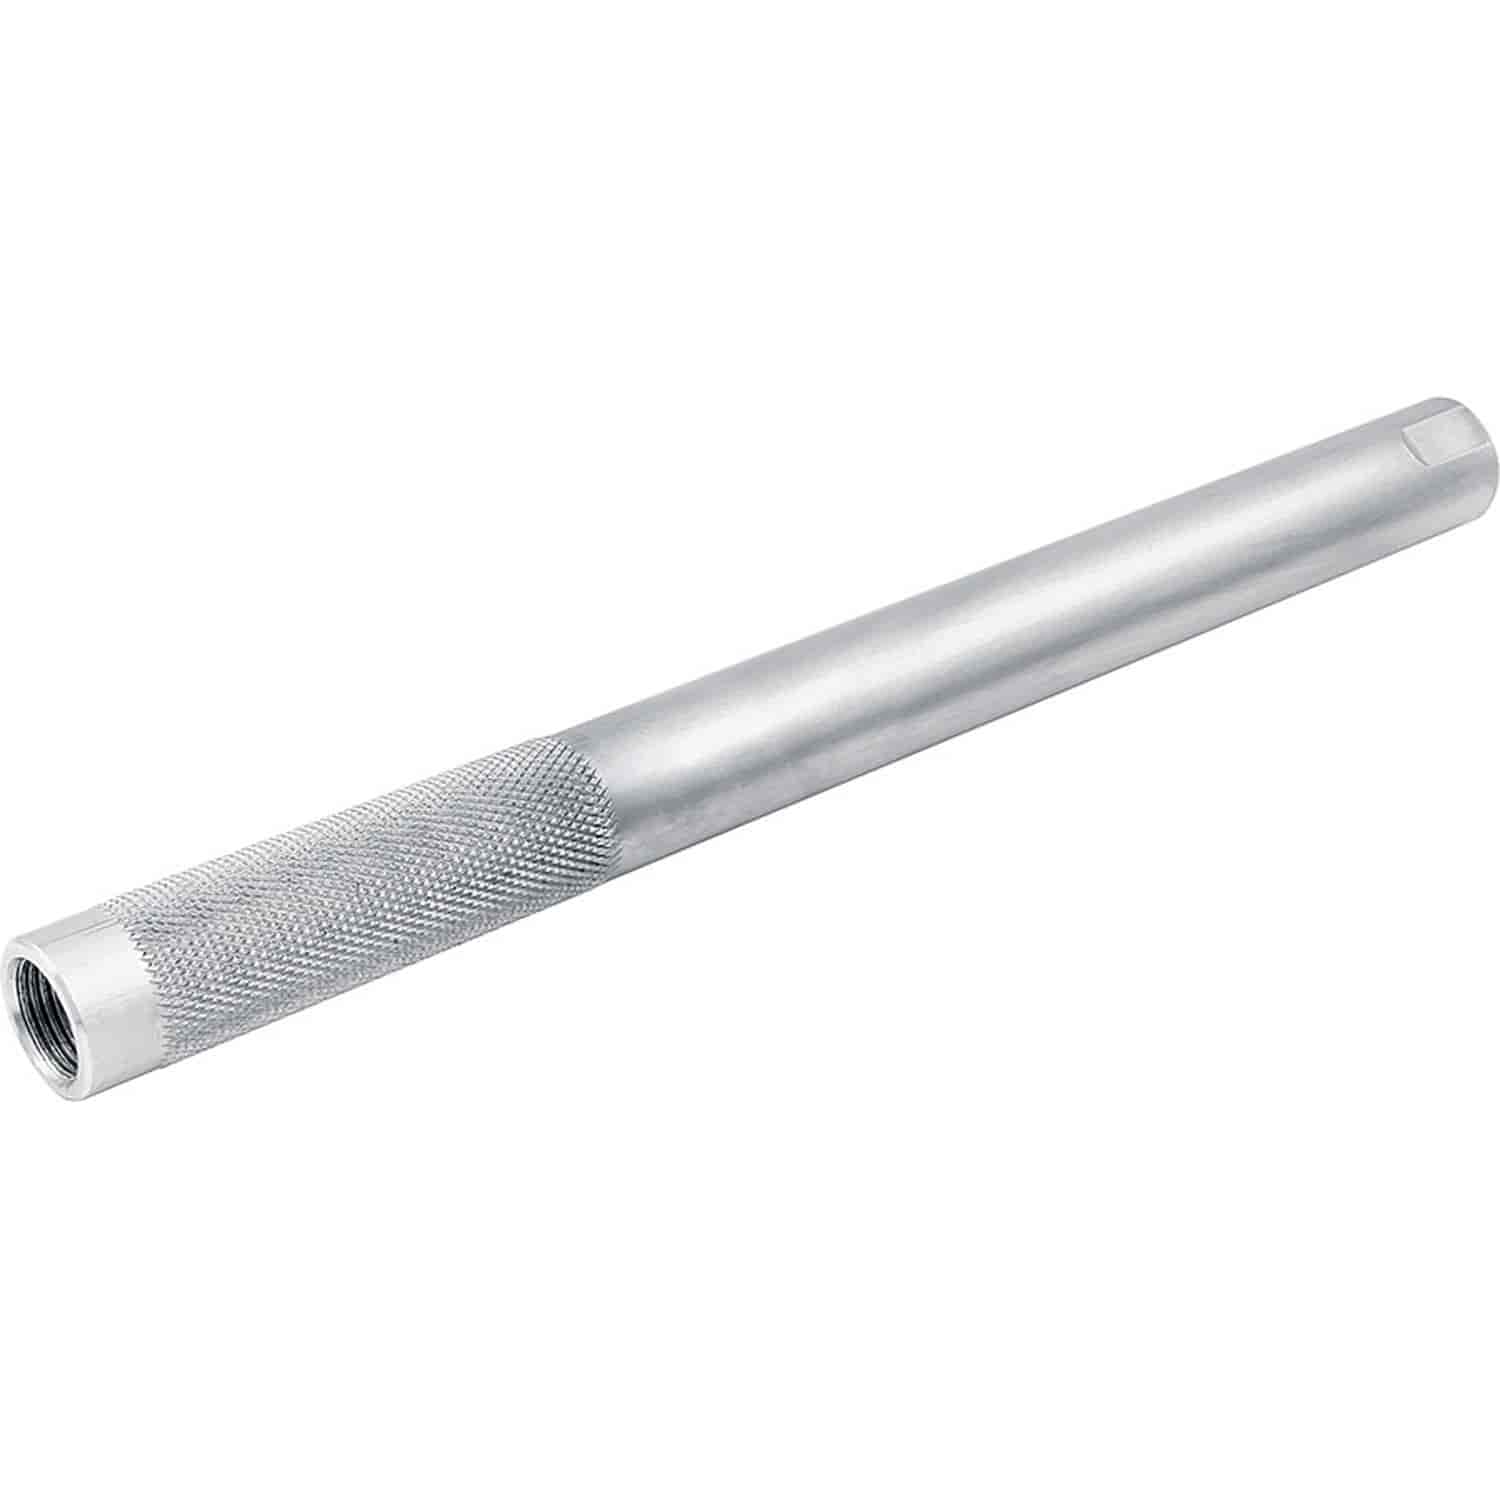 Swedged Aluminum Tie Rod Tube Length: 27"